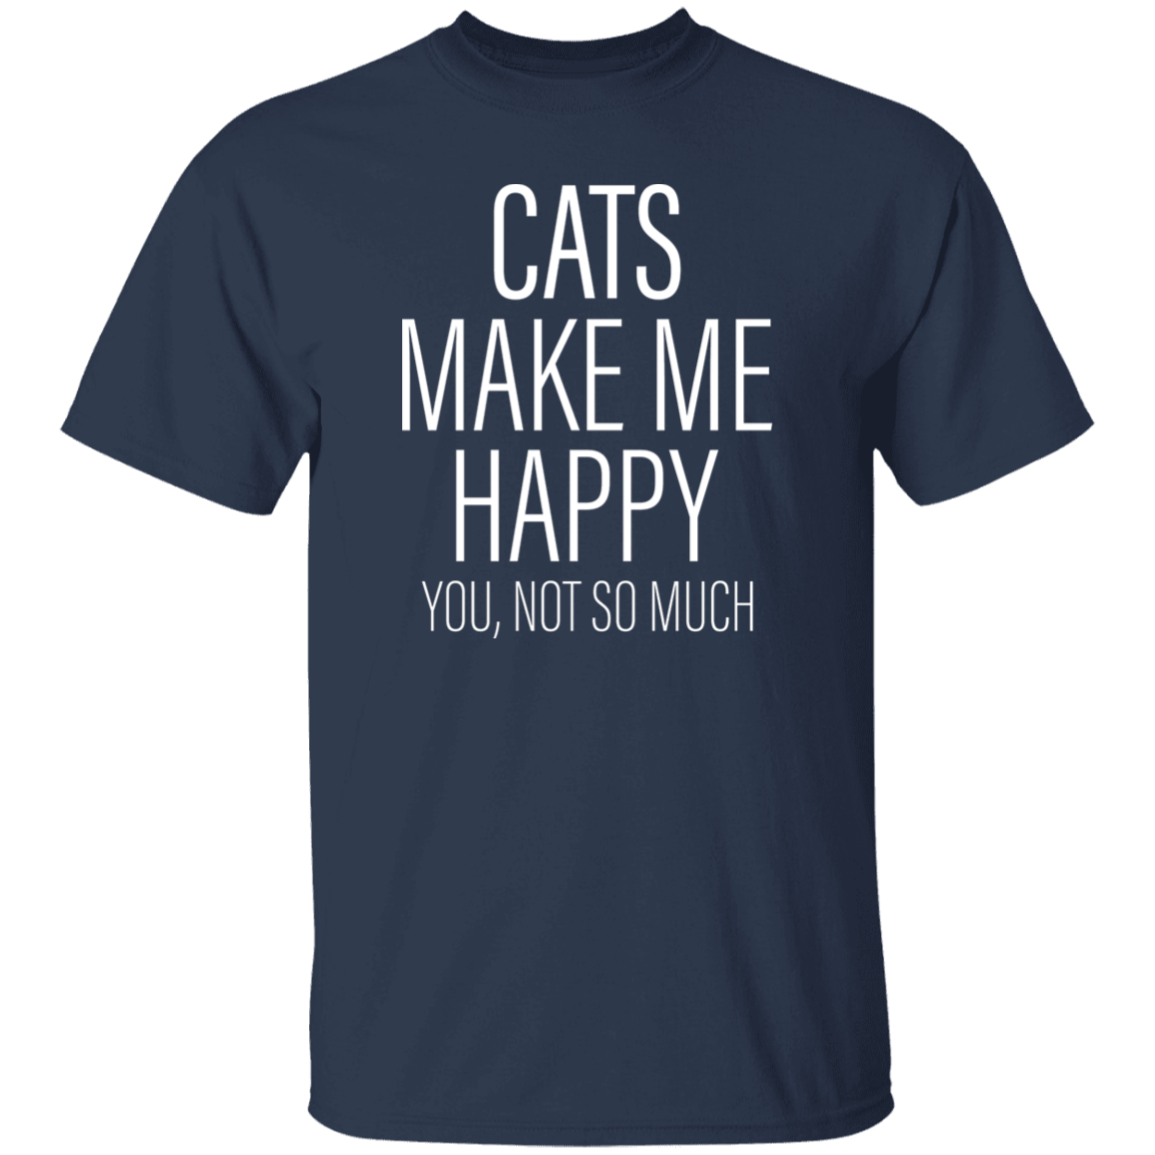 Cats Make Me Happy - T Shirt.